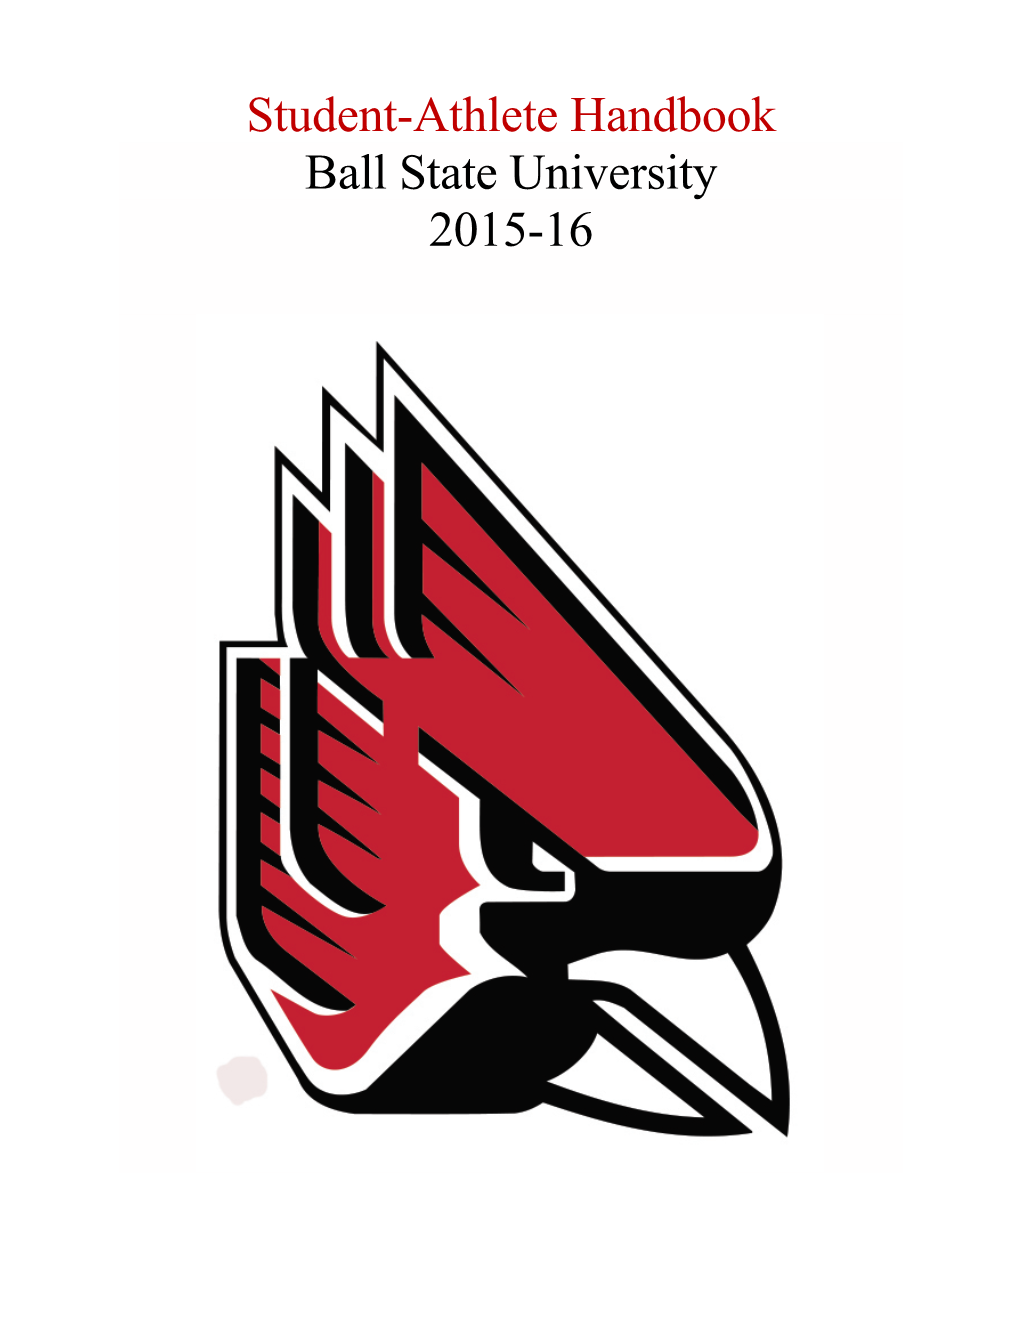 Student-Athlete Handbook Ball State University 2015-16